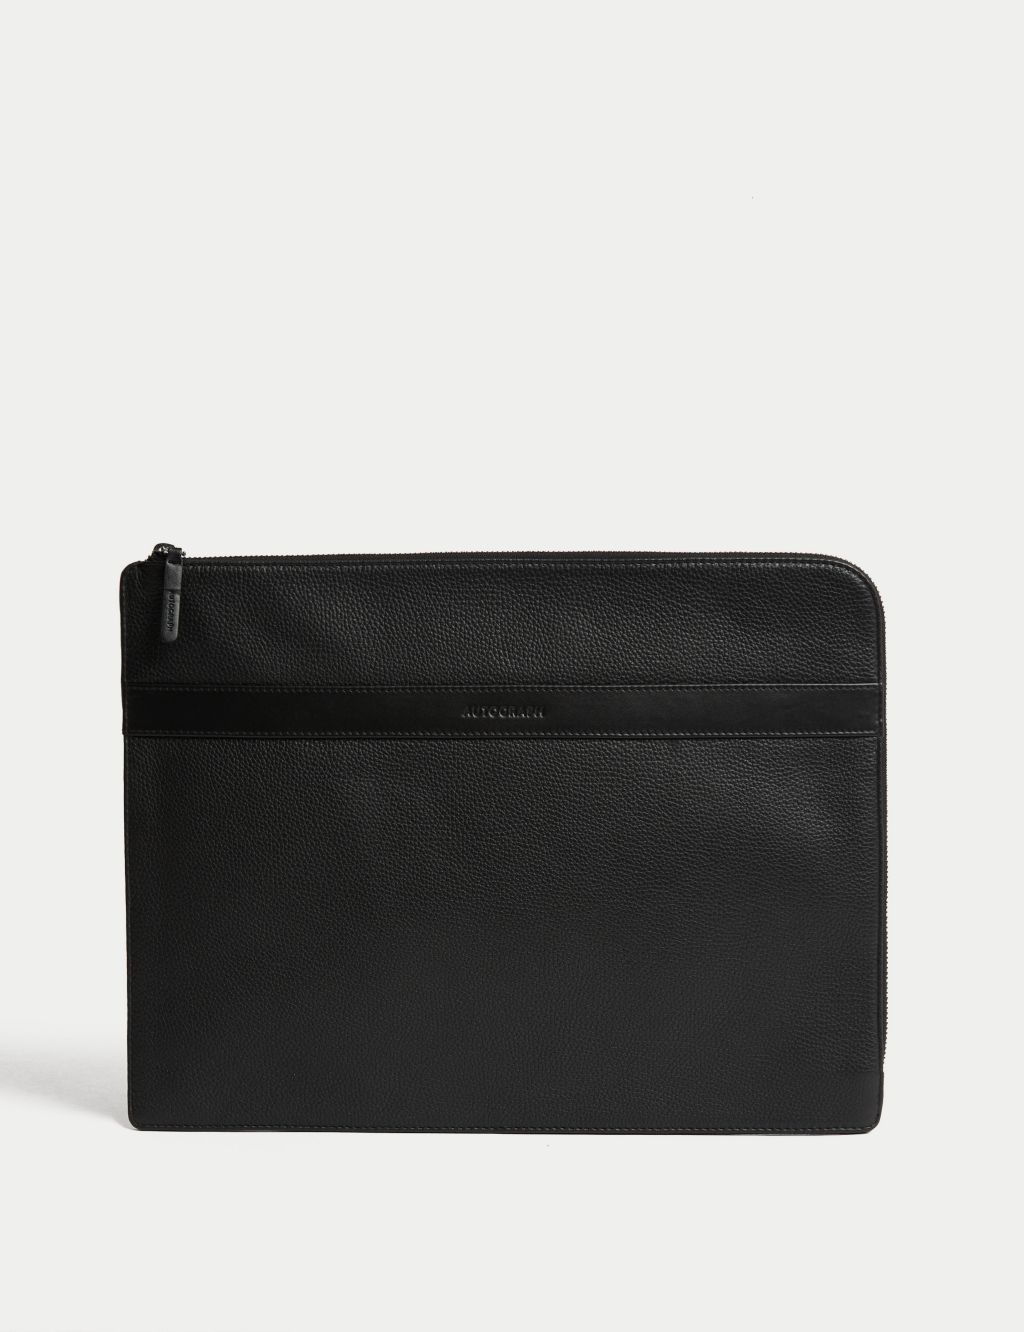 Leather Laptop Bag image 1